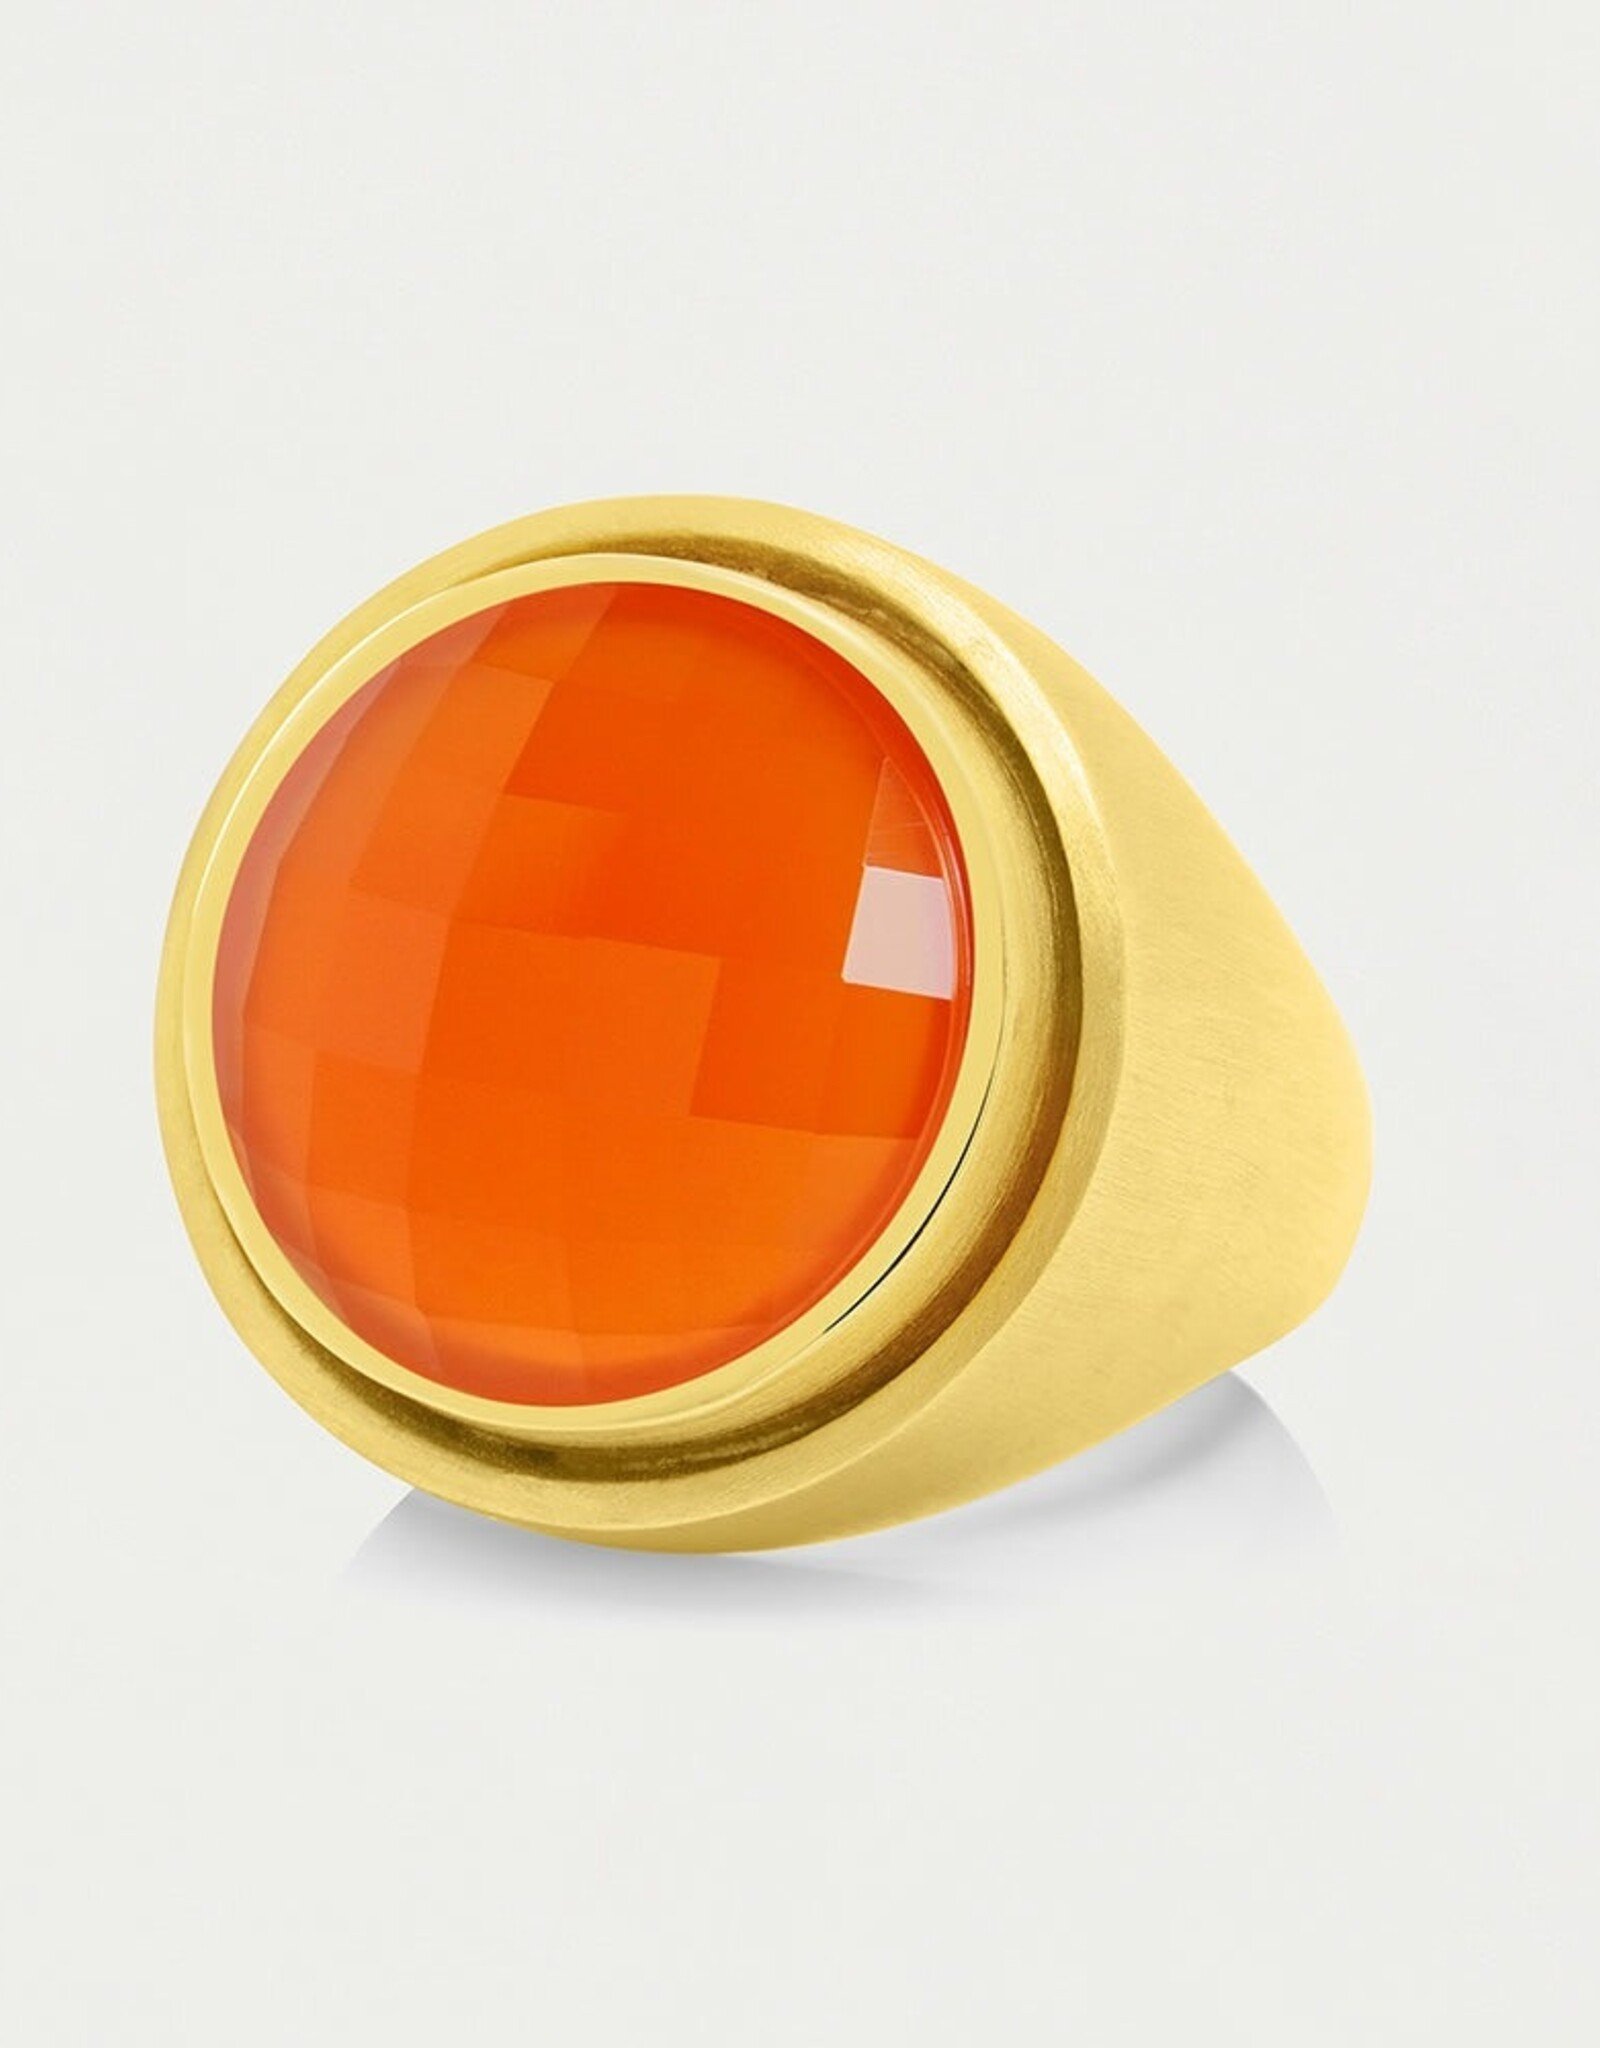 Dean Davidson Signet Ring, Orange Onyx and Gold